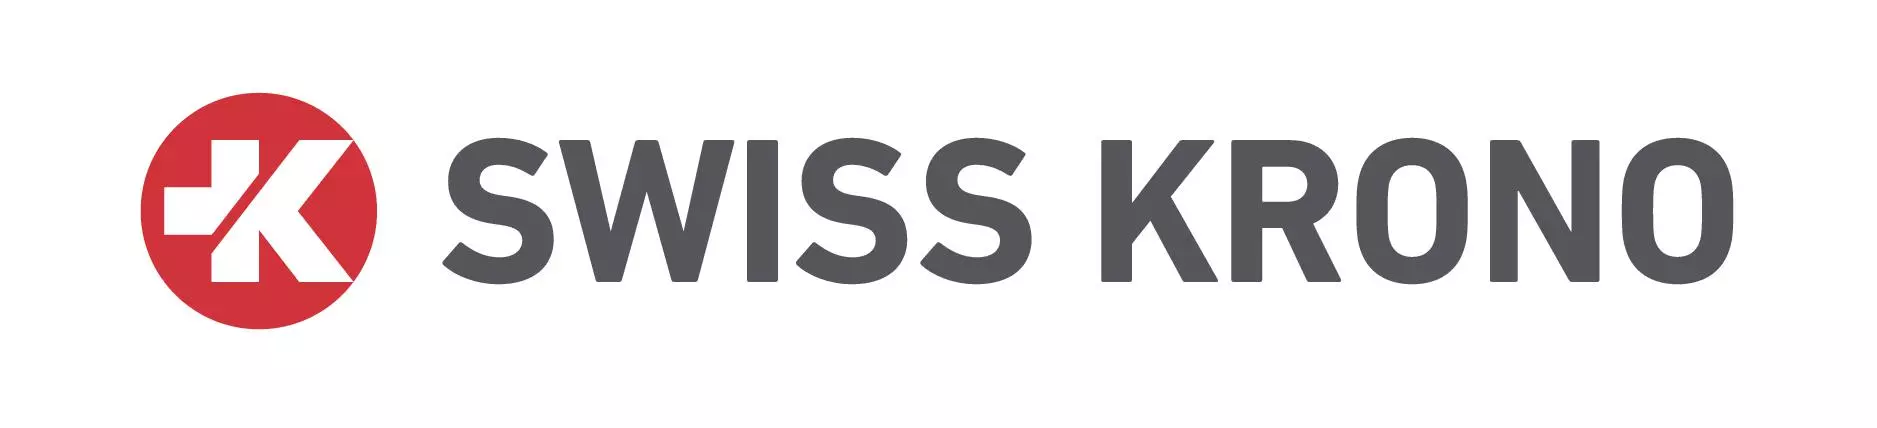 Swiss krono logo